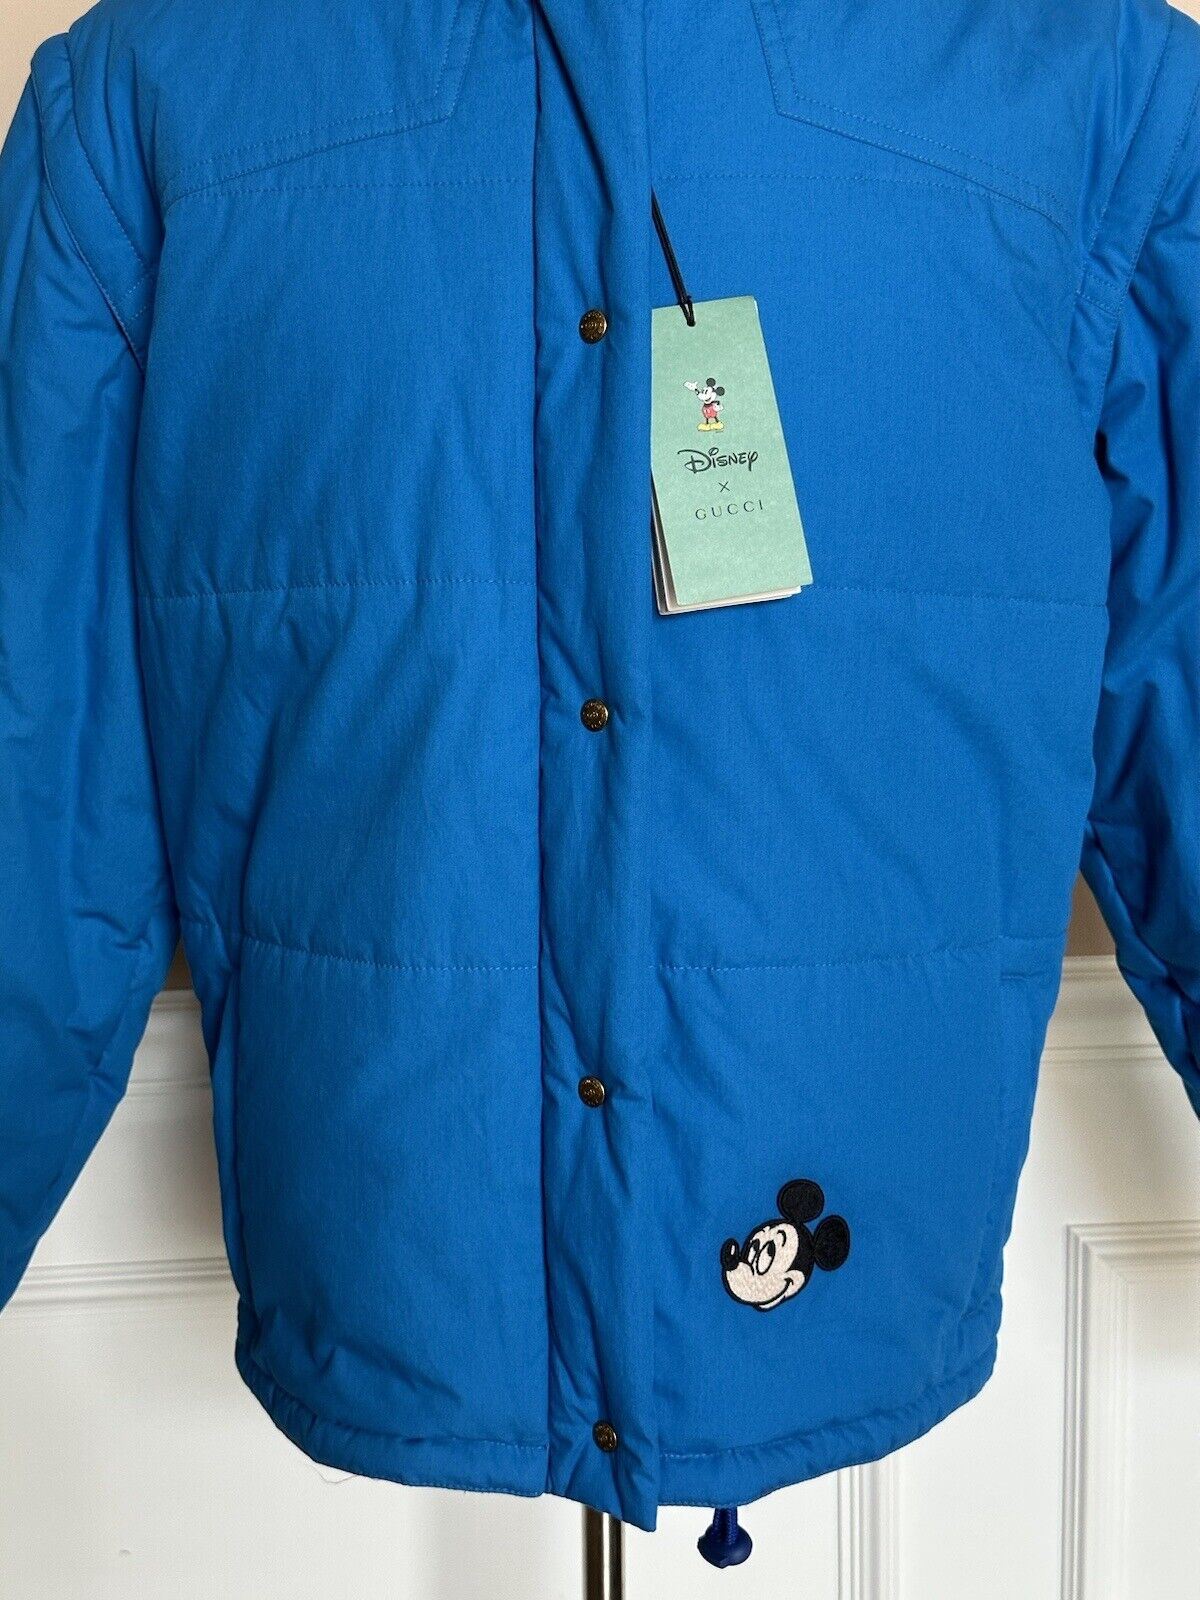 Neu mit Etikett: Gucci Herren-Mickey-Mouse-Disney-Blaujacke mit Kapuze, Größe L (42 US), 608978